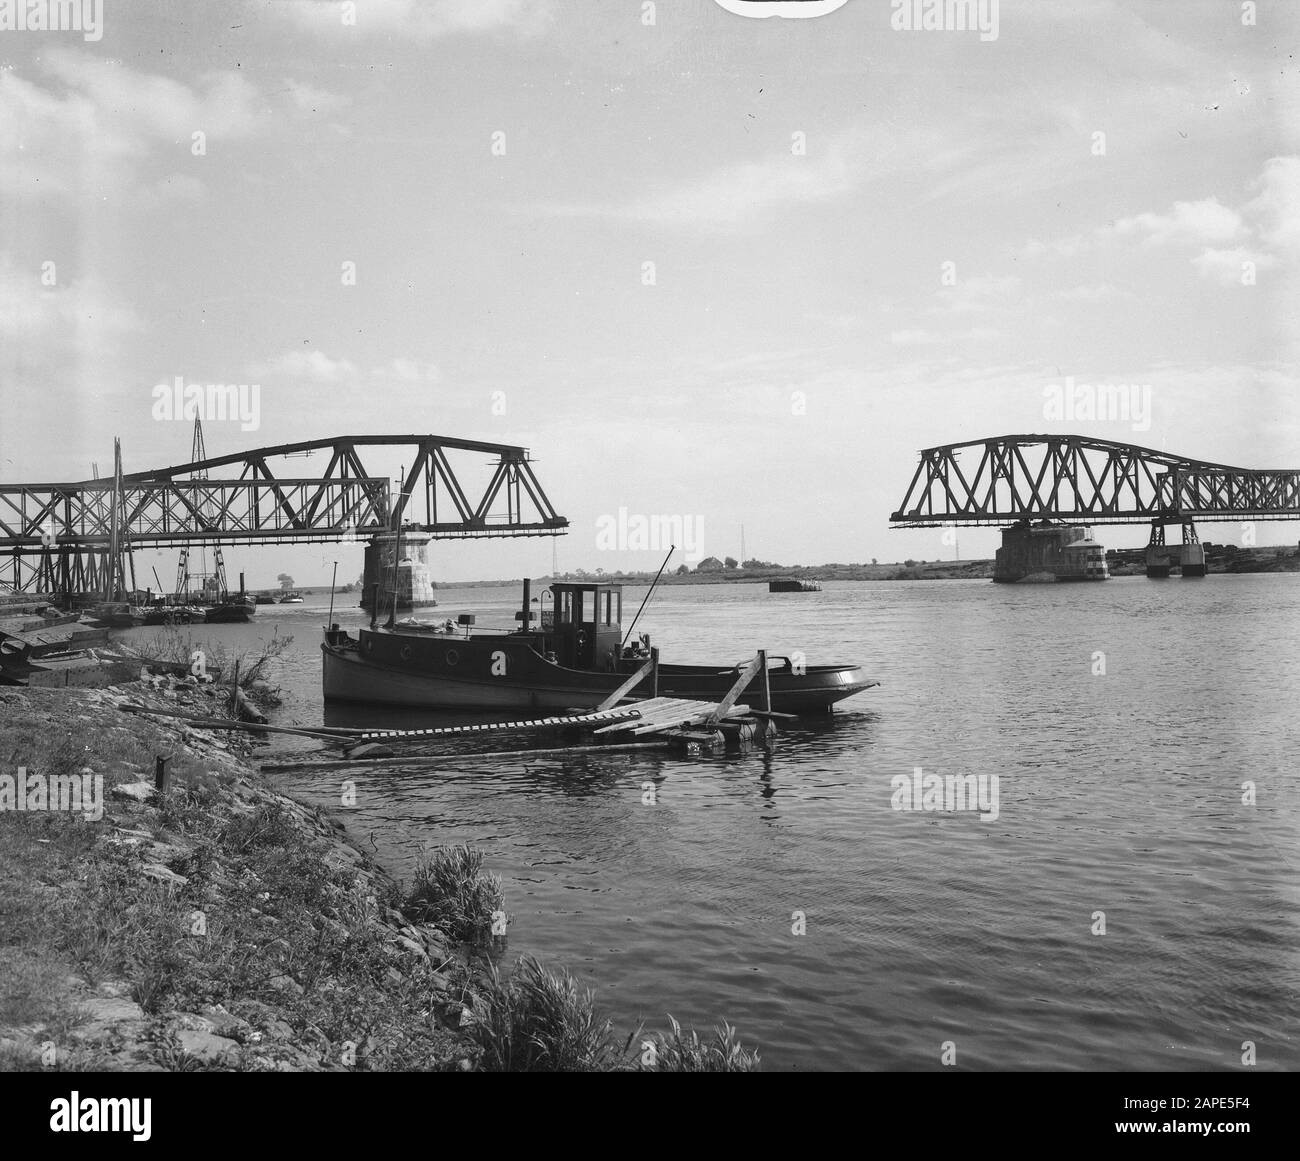 Bridge by Hedel Date: 23 September 1946 Location: Hedel Keywords: BRIDGE Stock Photo